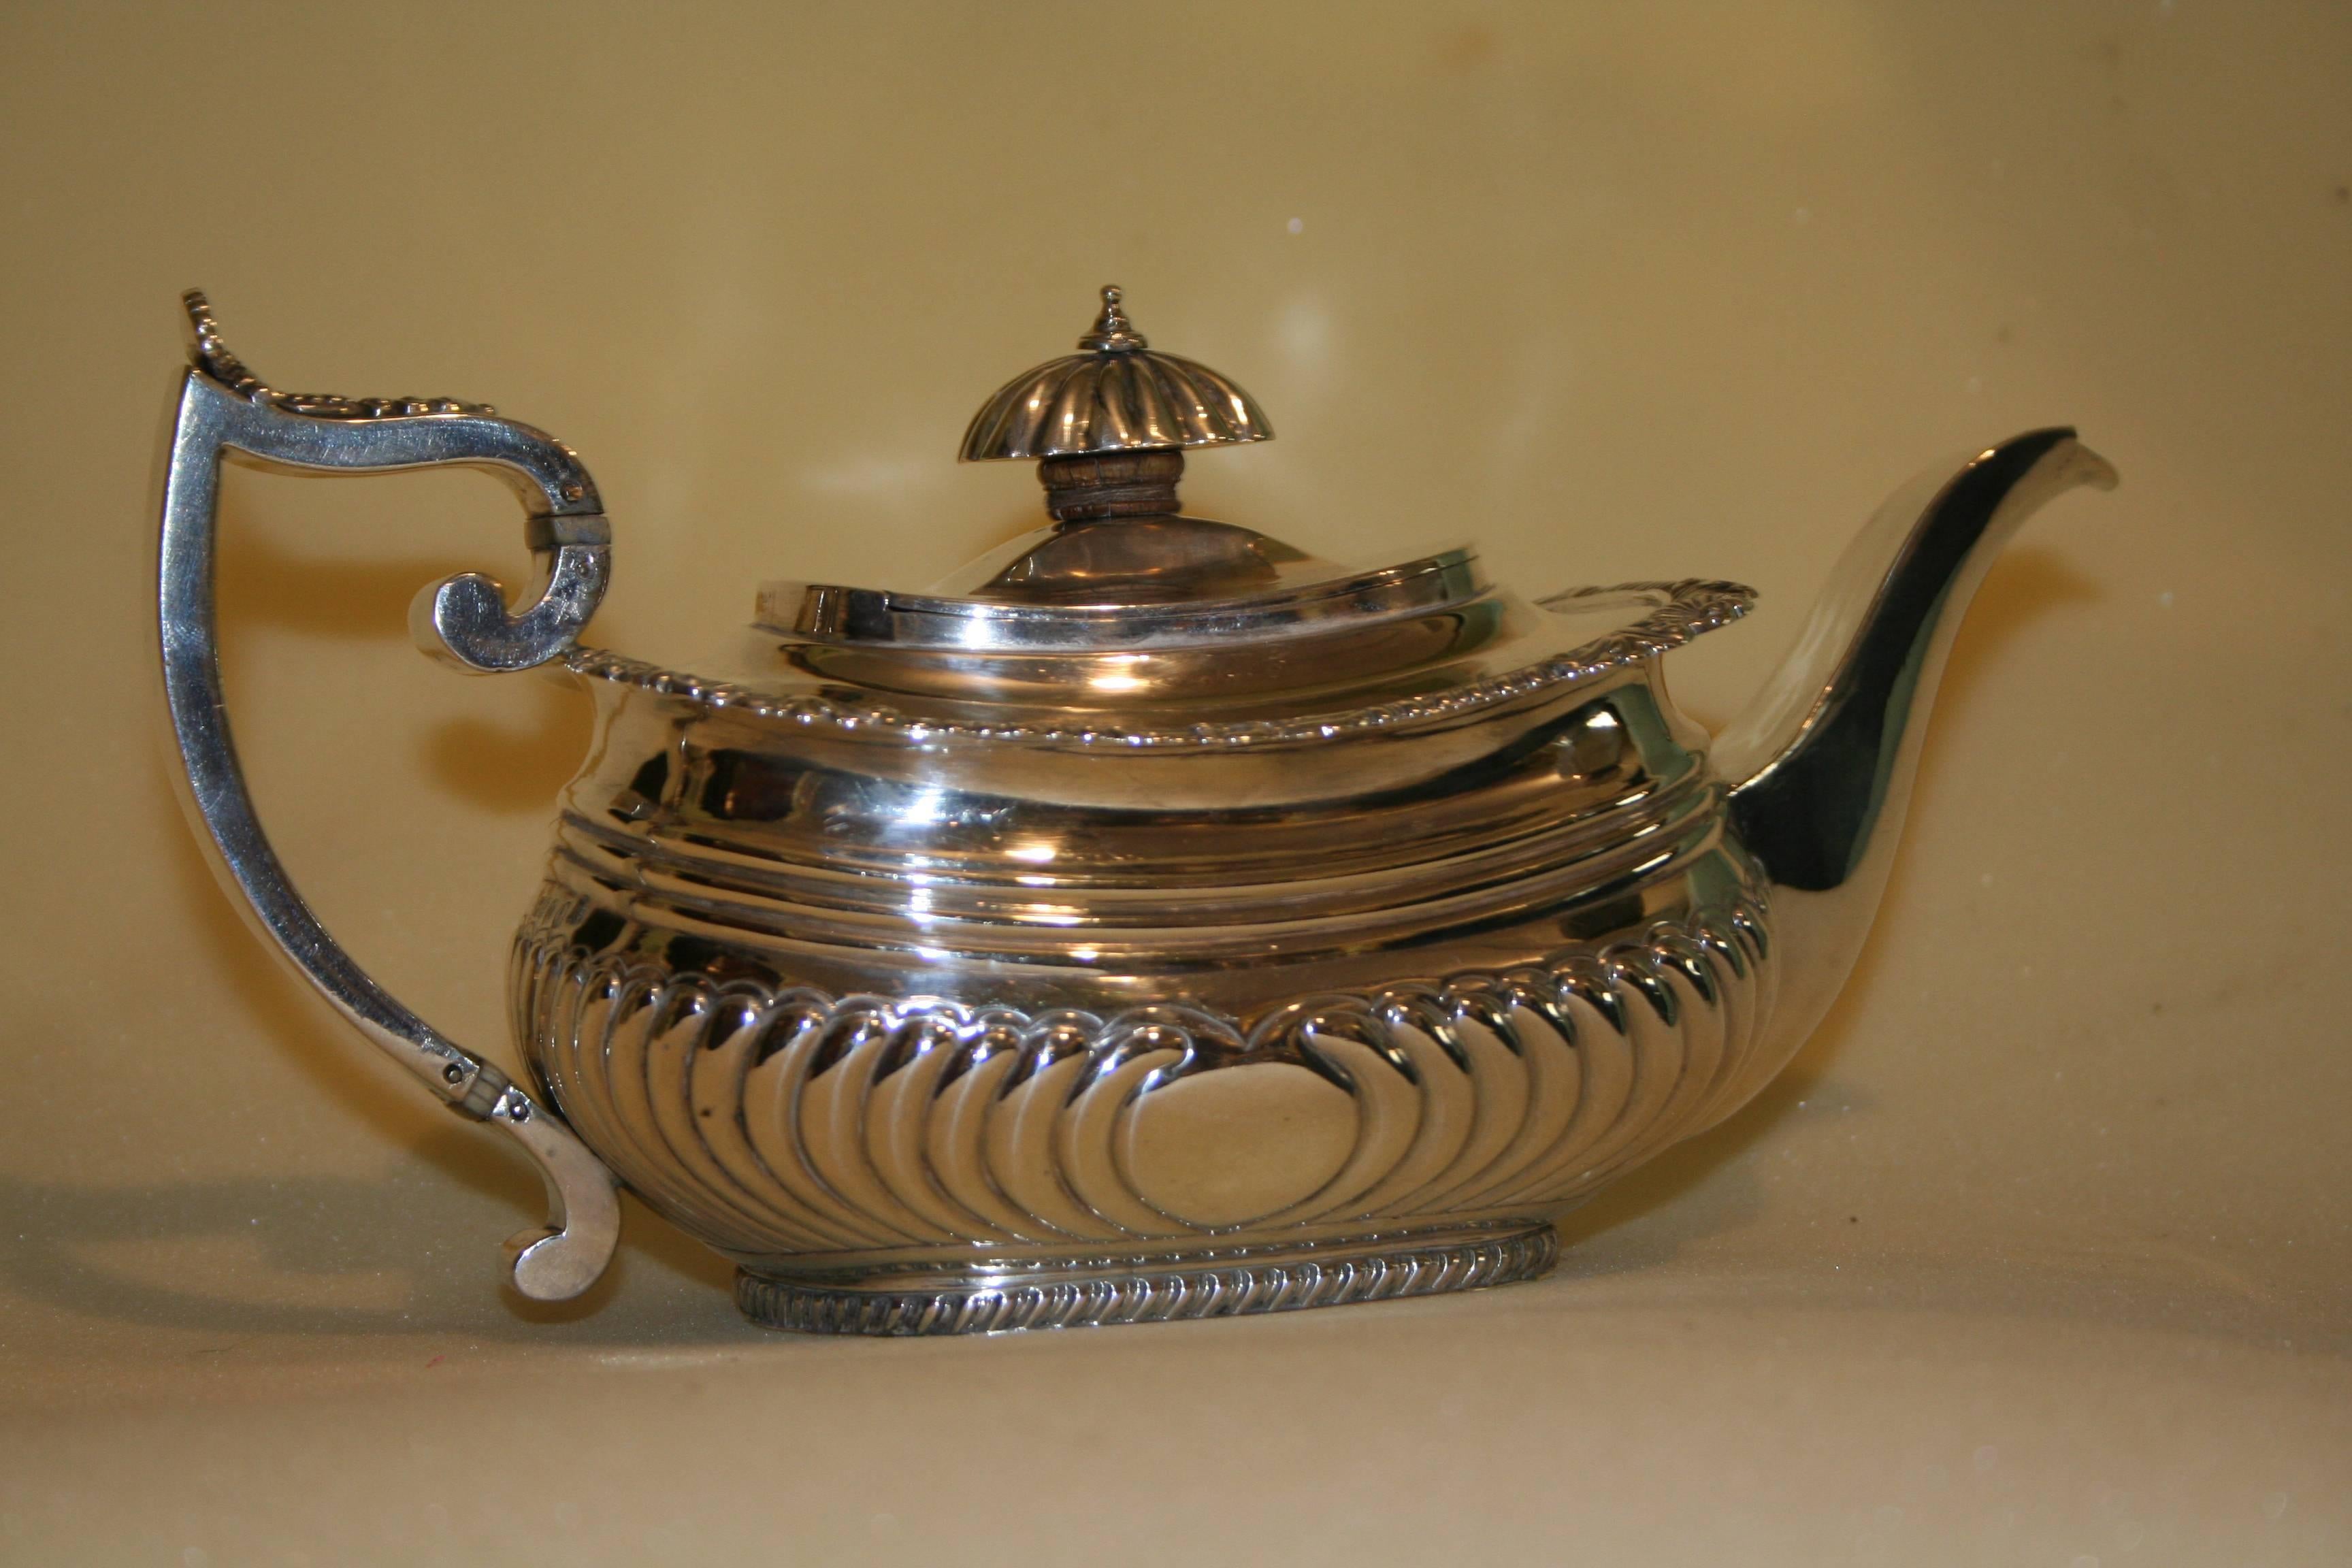 Fantastic silver teapot